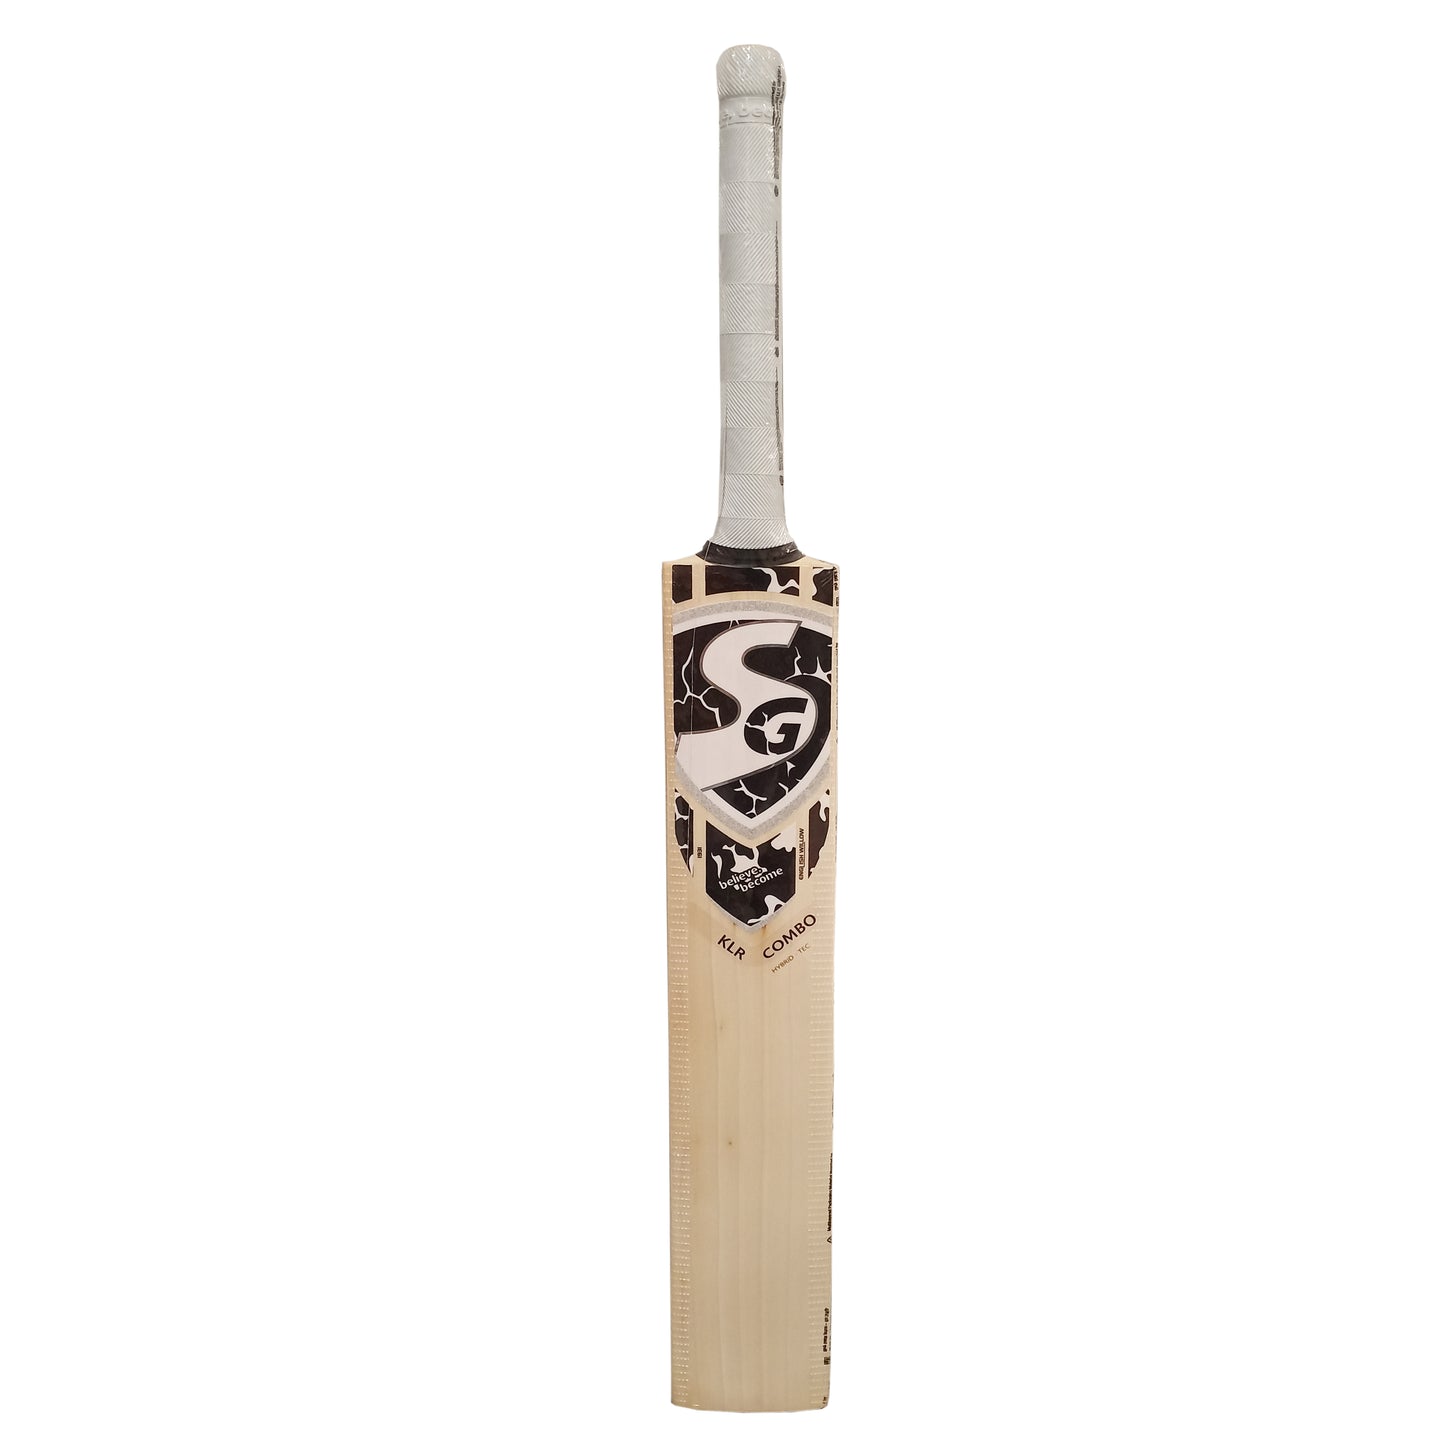 SG KLR COMBO Hybrid-Tec English Willow Cricket Bat - Best Price online Prokicksports.com